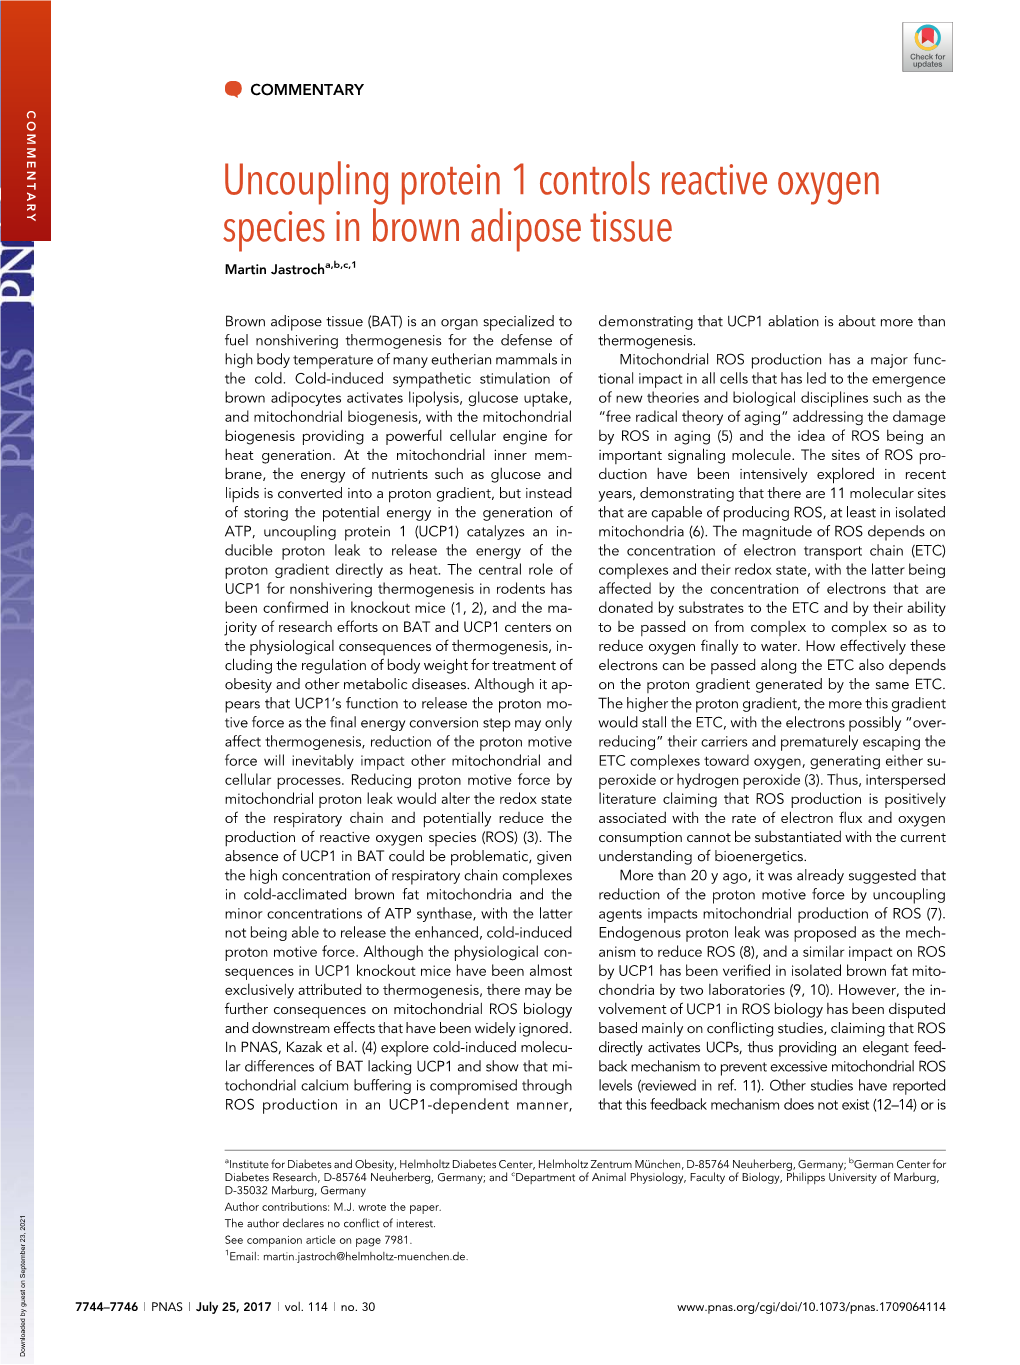 Uncoupling Protein 1 Controls Reactive Oxygen Species in Brown Adipose Tissue Martin Jastrocha,B,C,1